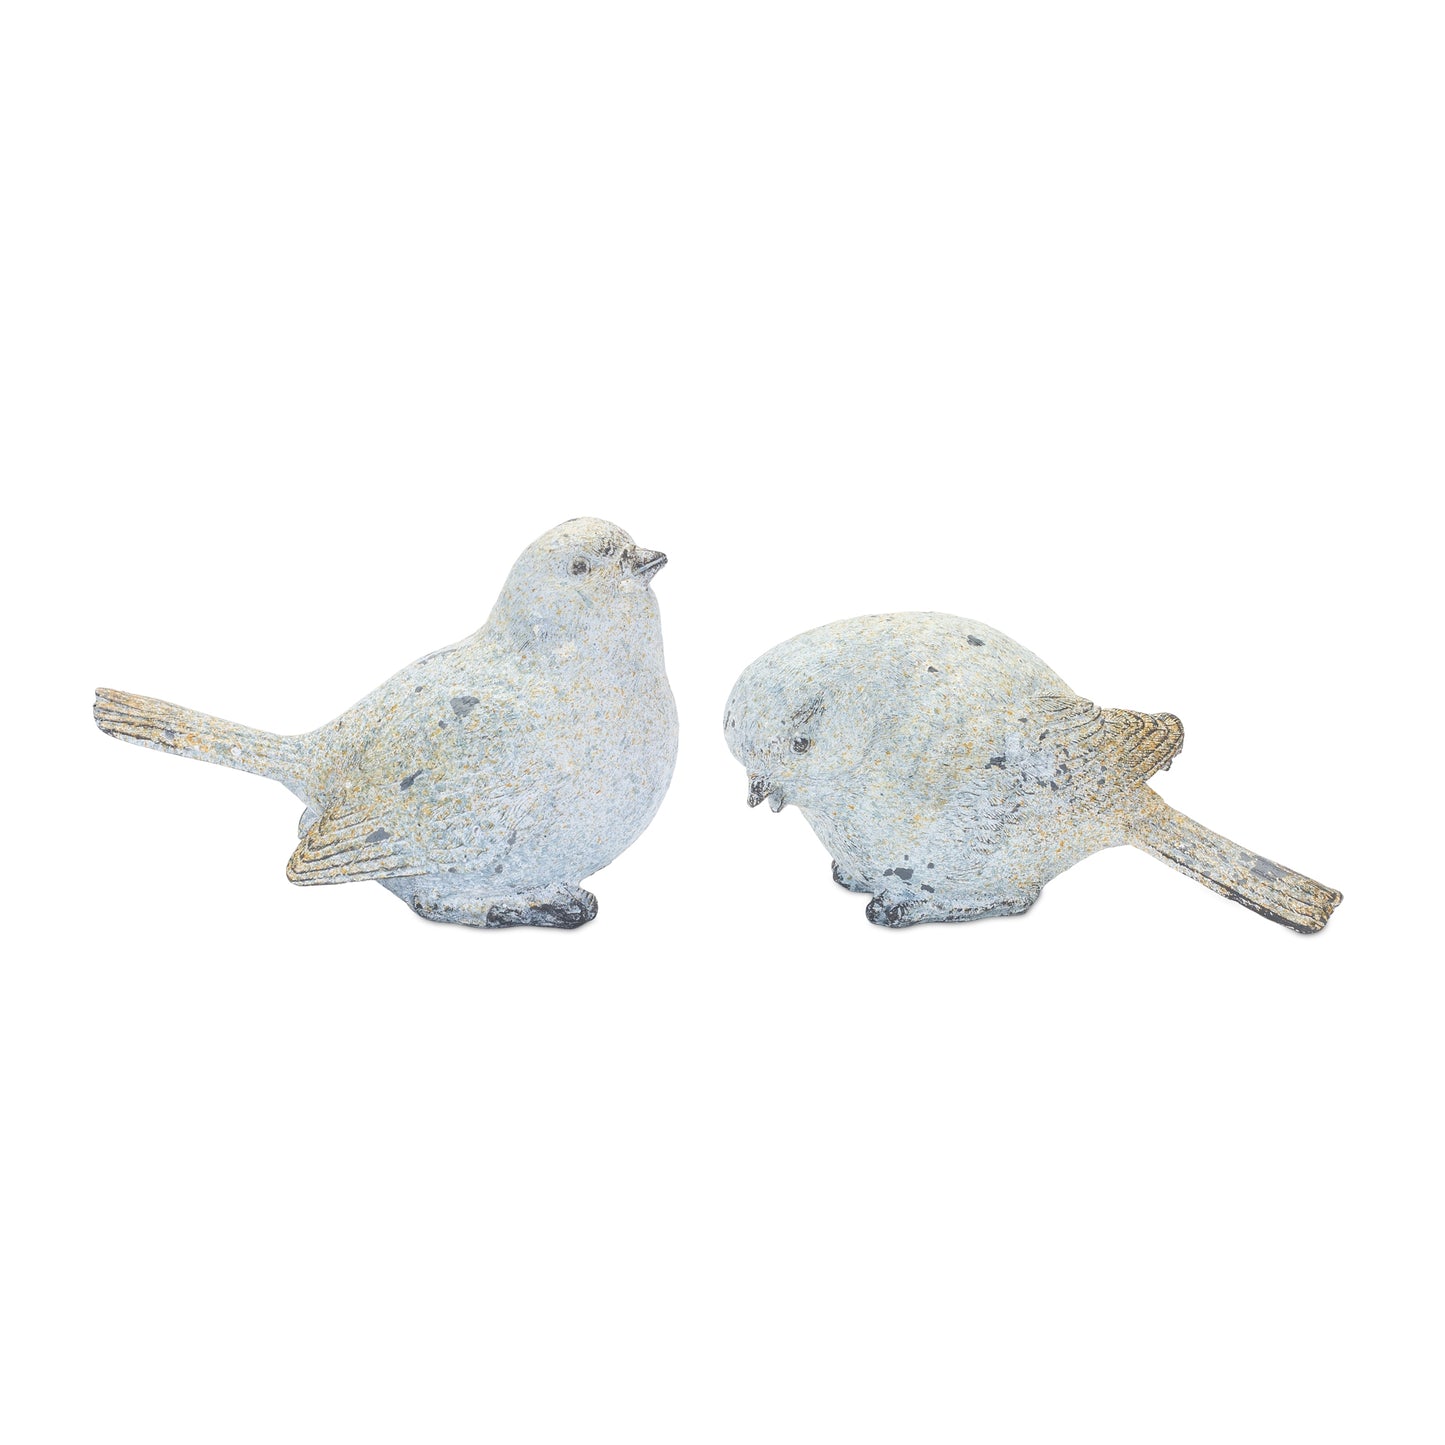 Weathered Stone Bird Figurine with Distressed Finish (Set of 4)